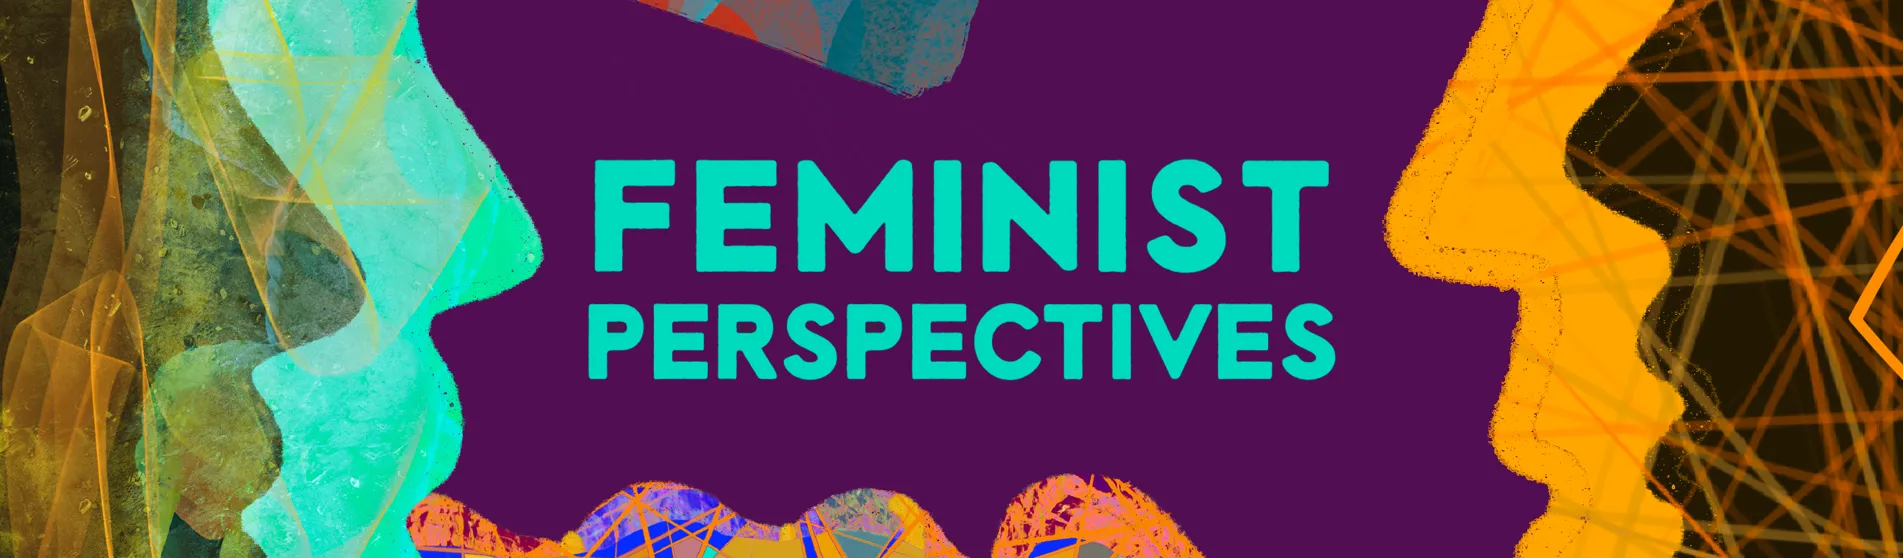 Feminist-perspectives-banner